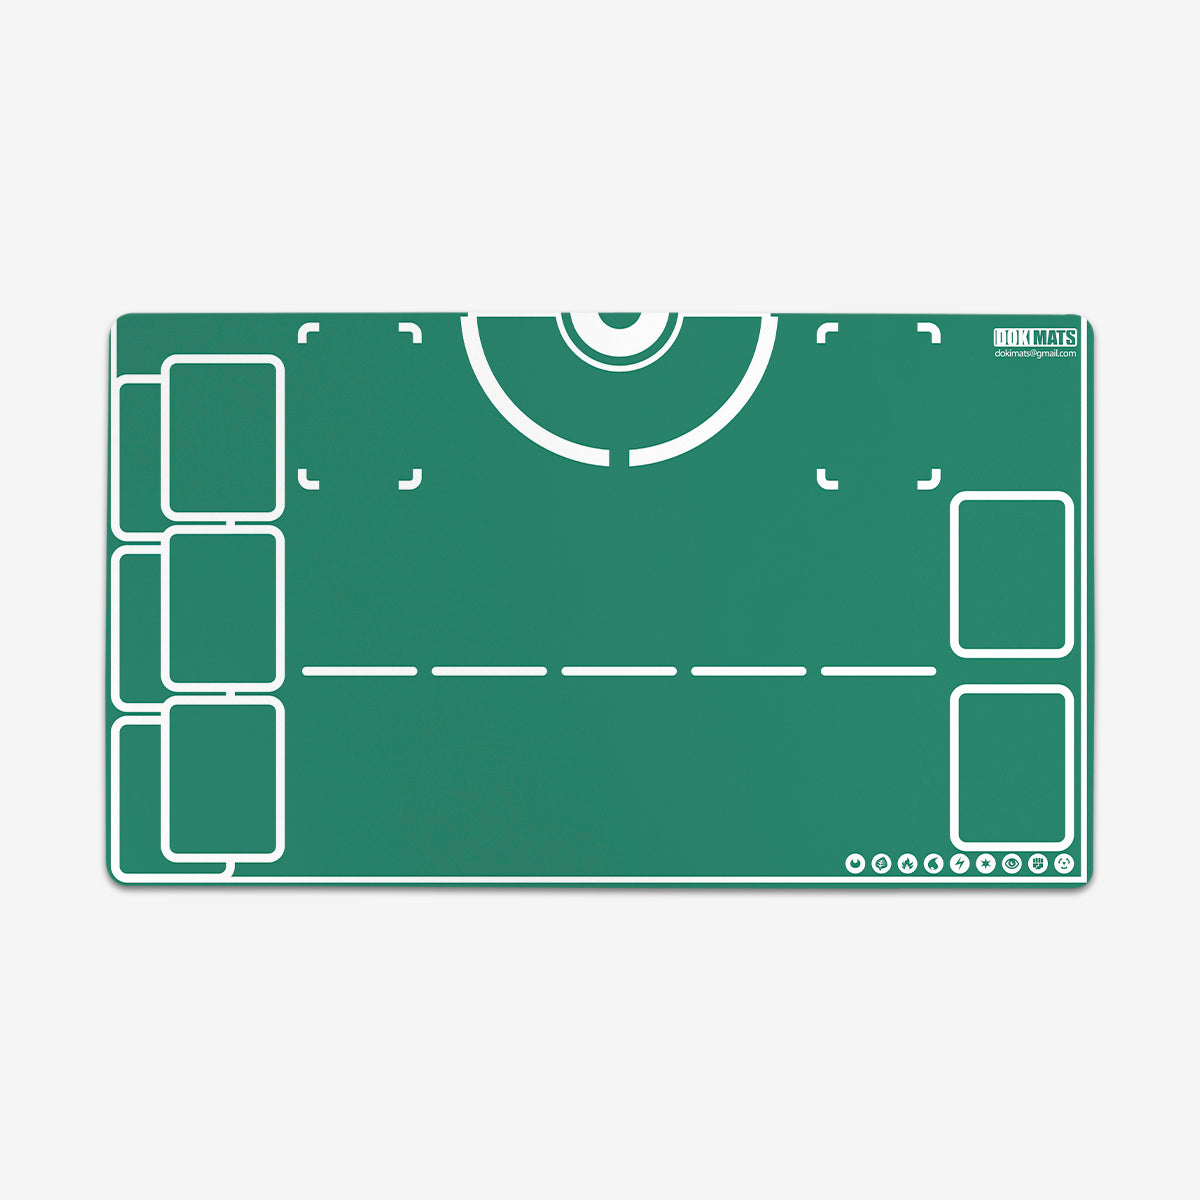 Custom TCG Playmat with optional PlayZones and Edge Stitching